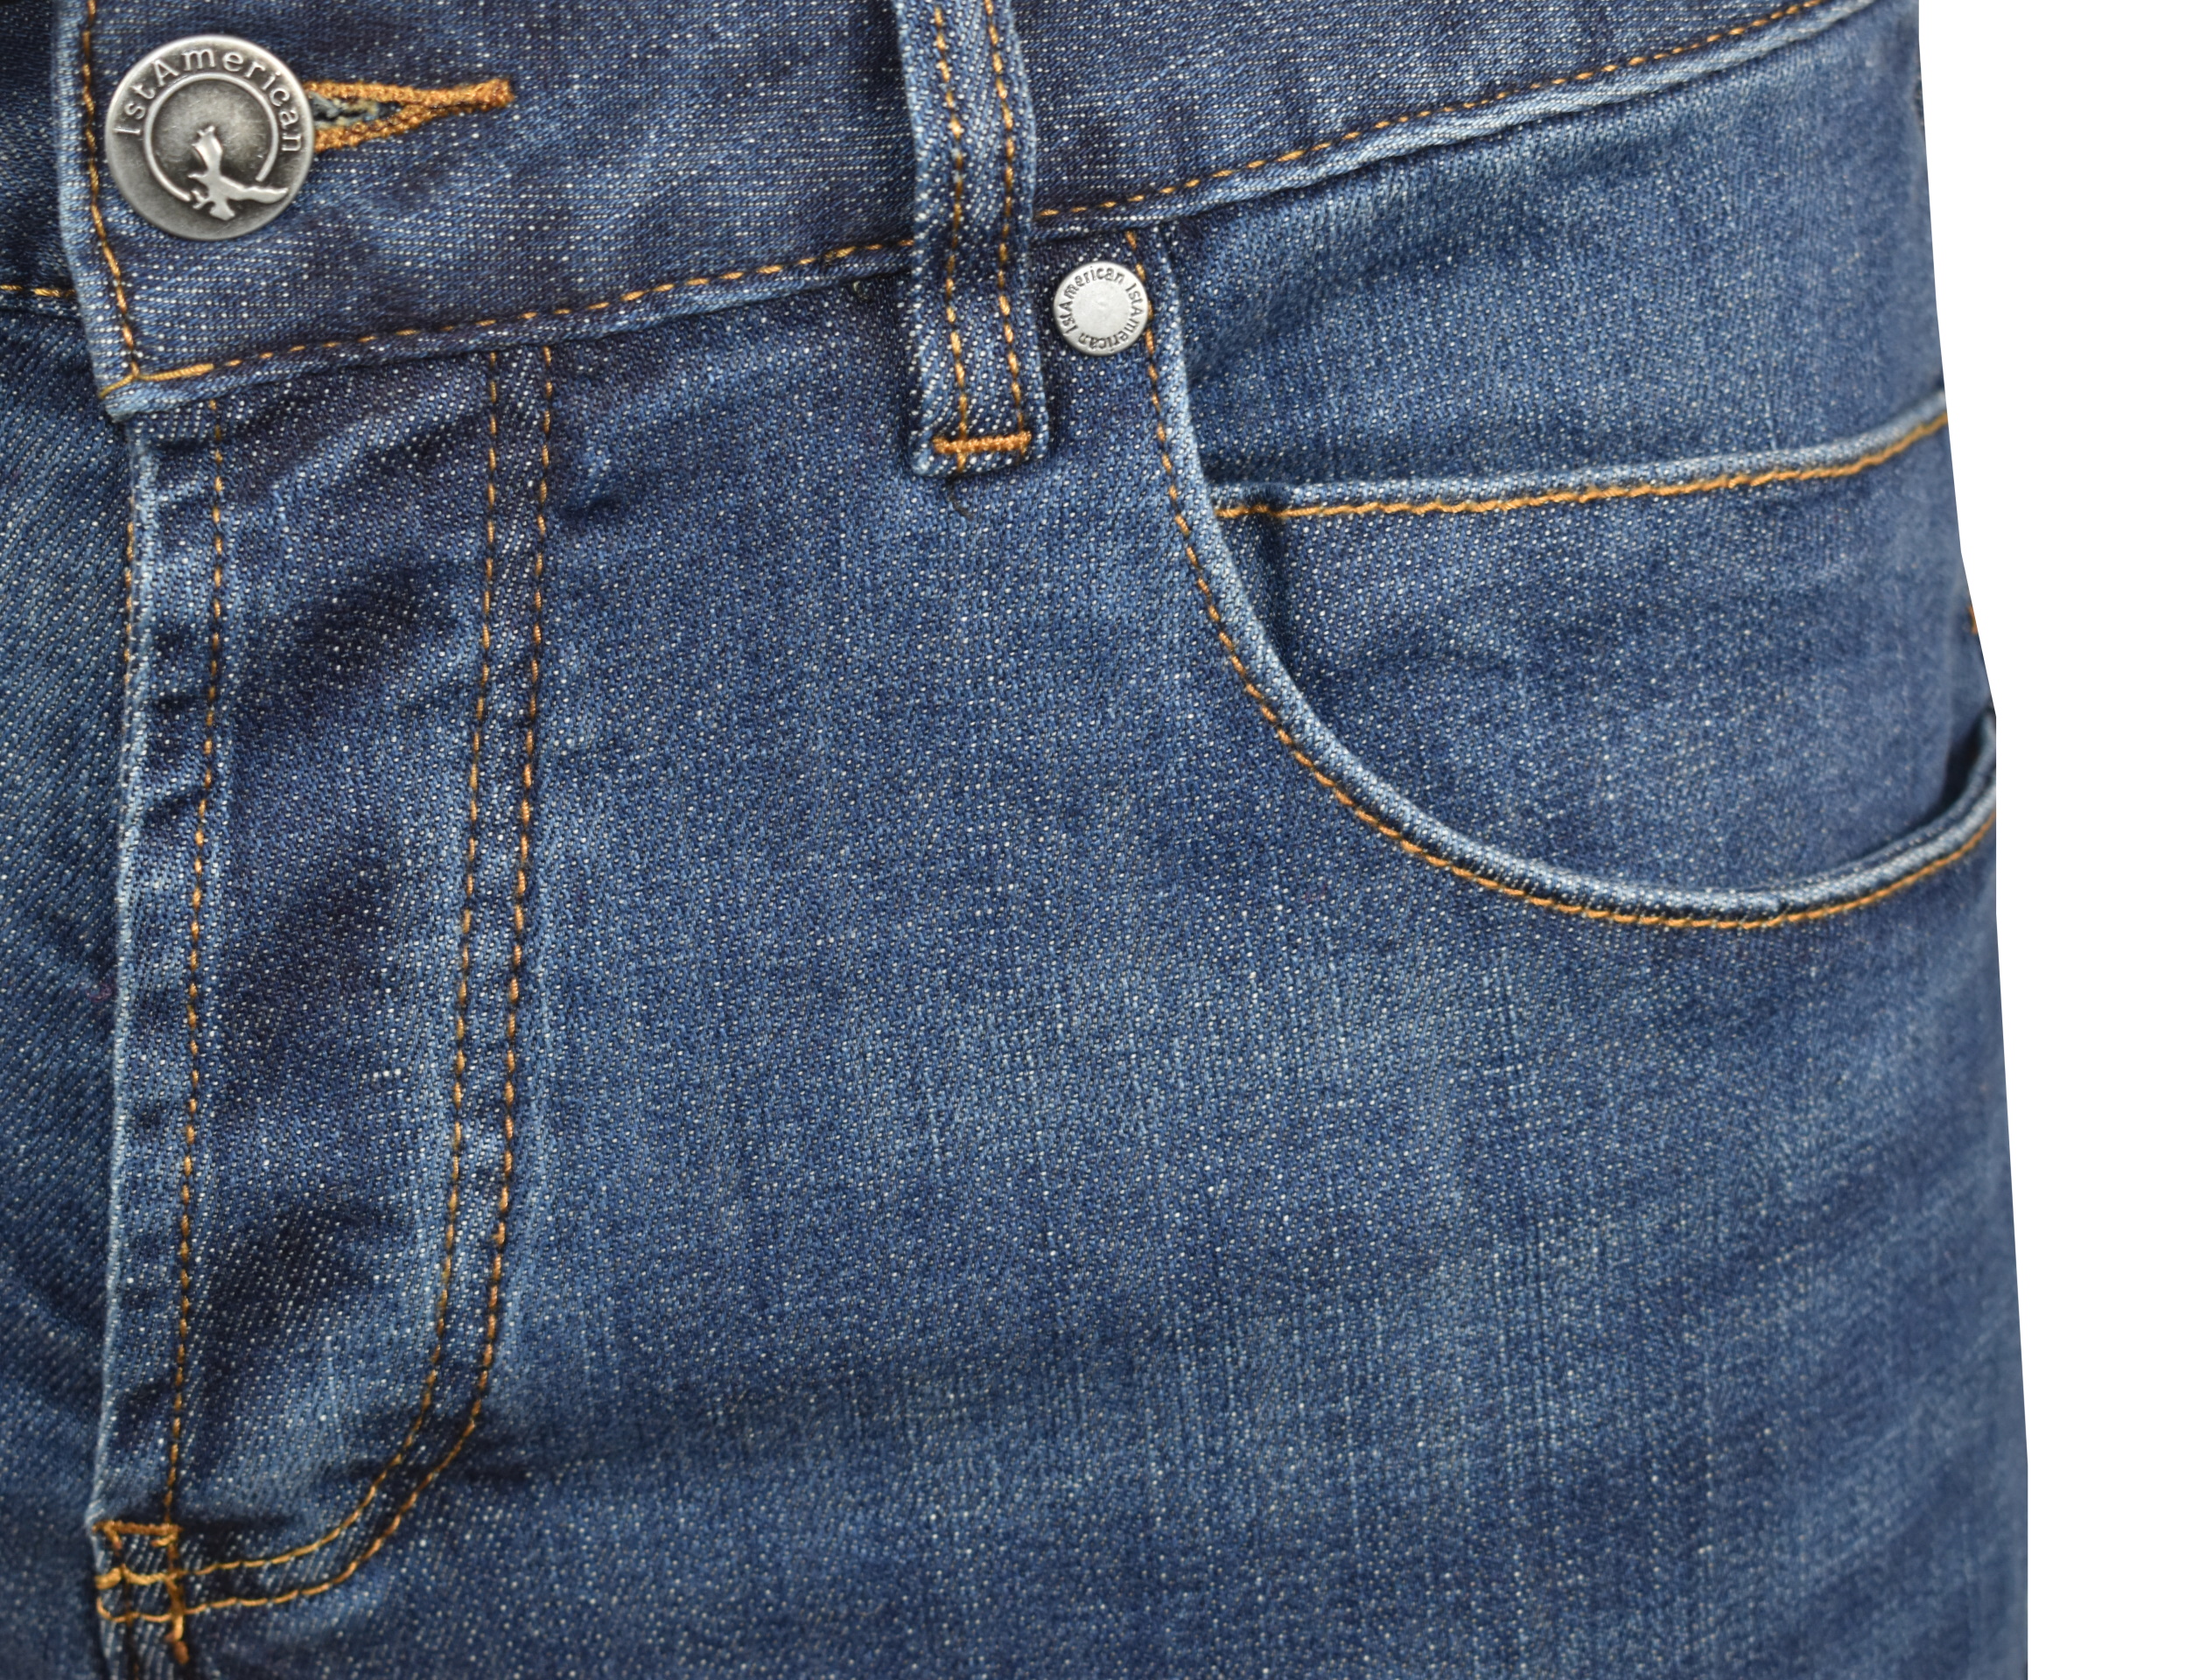 SAM JEANS UOMO 5 TASCHE BLU DENIM 3 1st american jeans fashion uomo 5 tasche colore blu medio denim - 99% cotton 1% elastan denim 1150 oz